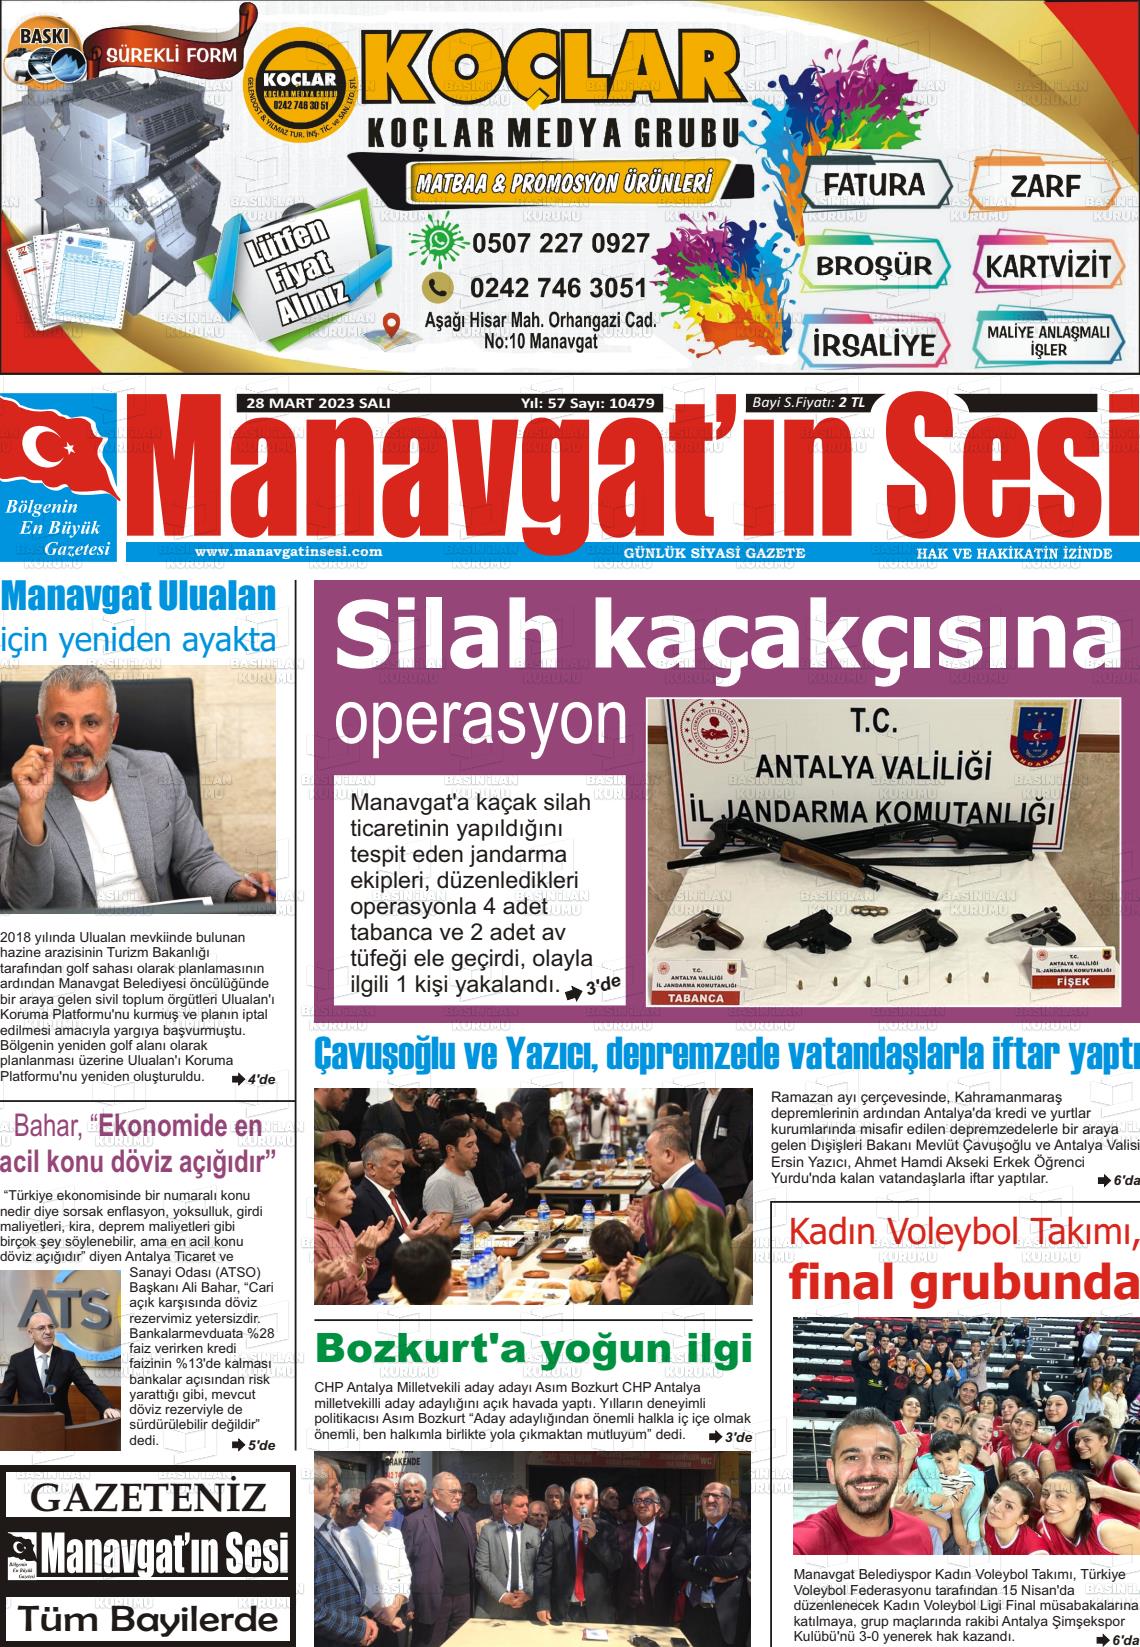 28 Mart 2023 Manavgat'ın Sesi Gazete Manşeti